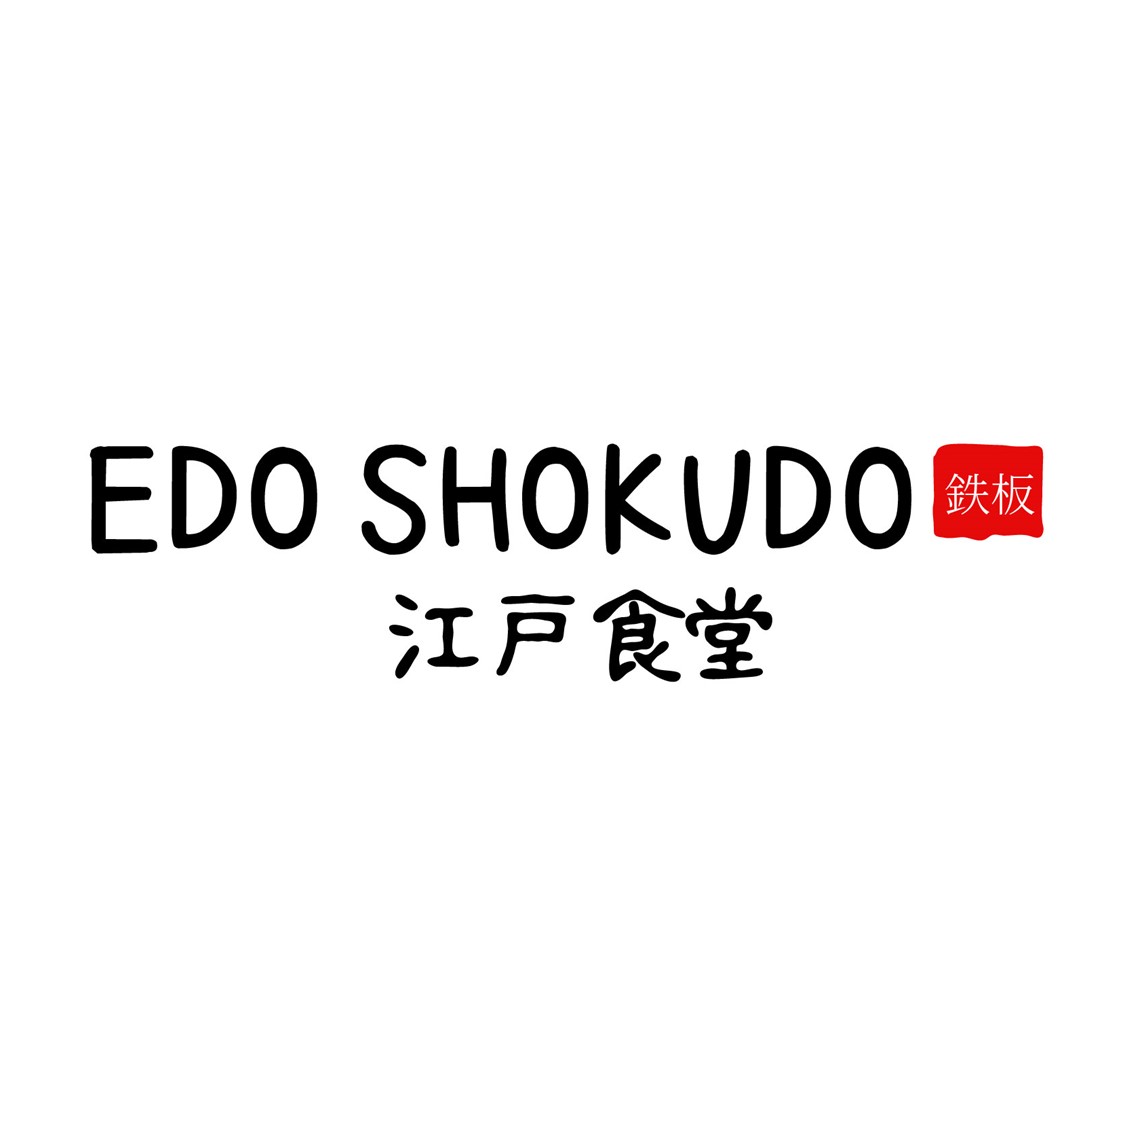 Edo Shokudo.jpg